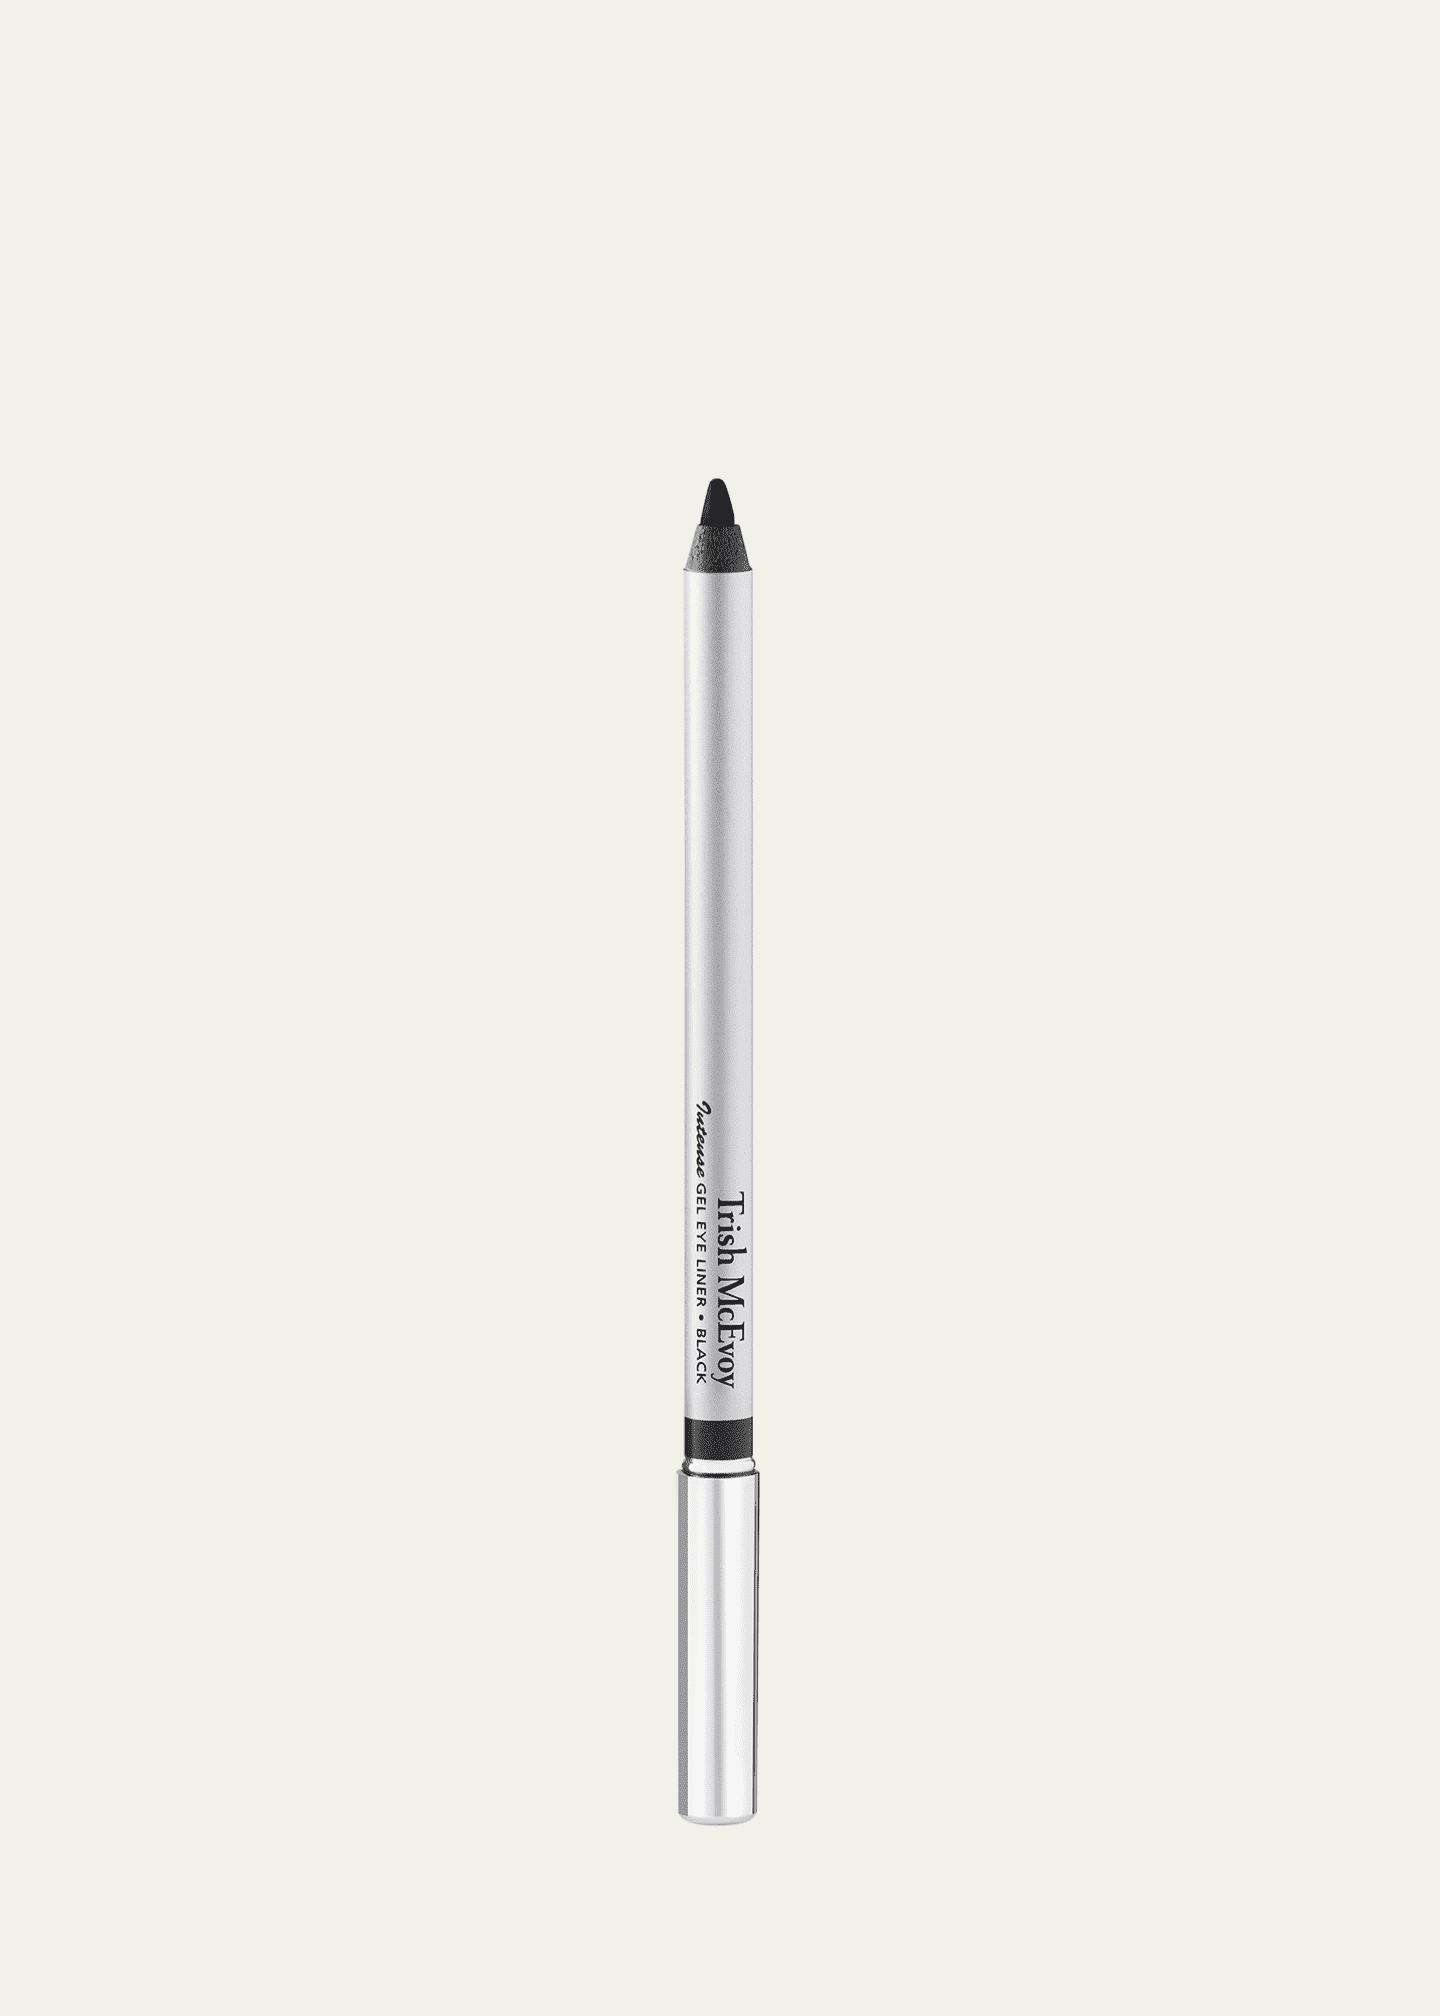 Trish McEvoy Intense Gel Eyeliner Pencil Image 3 of 4